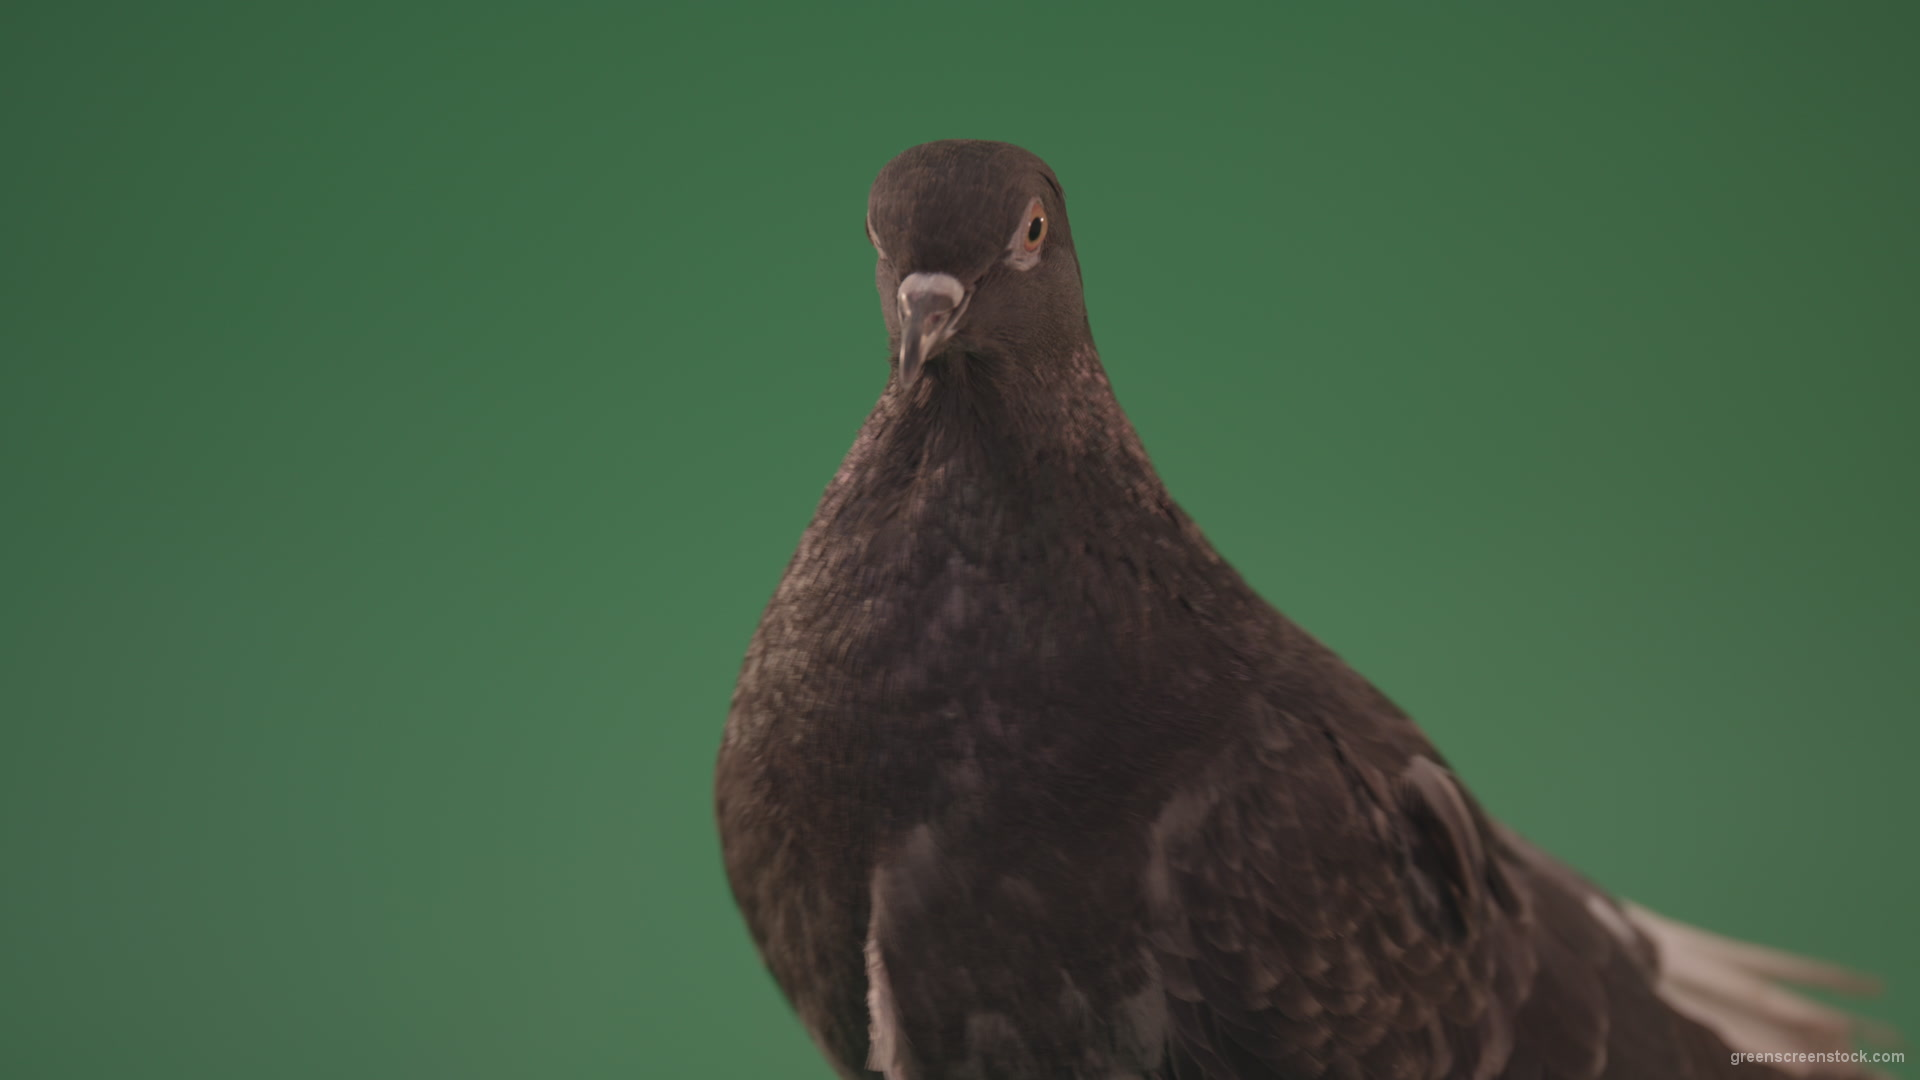 Gray-bird-of-mountain-origin-pigeon-strokes-its-lush-feathers-isolated-in-green-screen-studio_007 Green Screen Stock